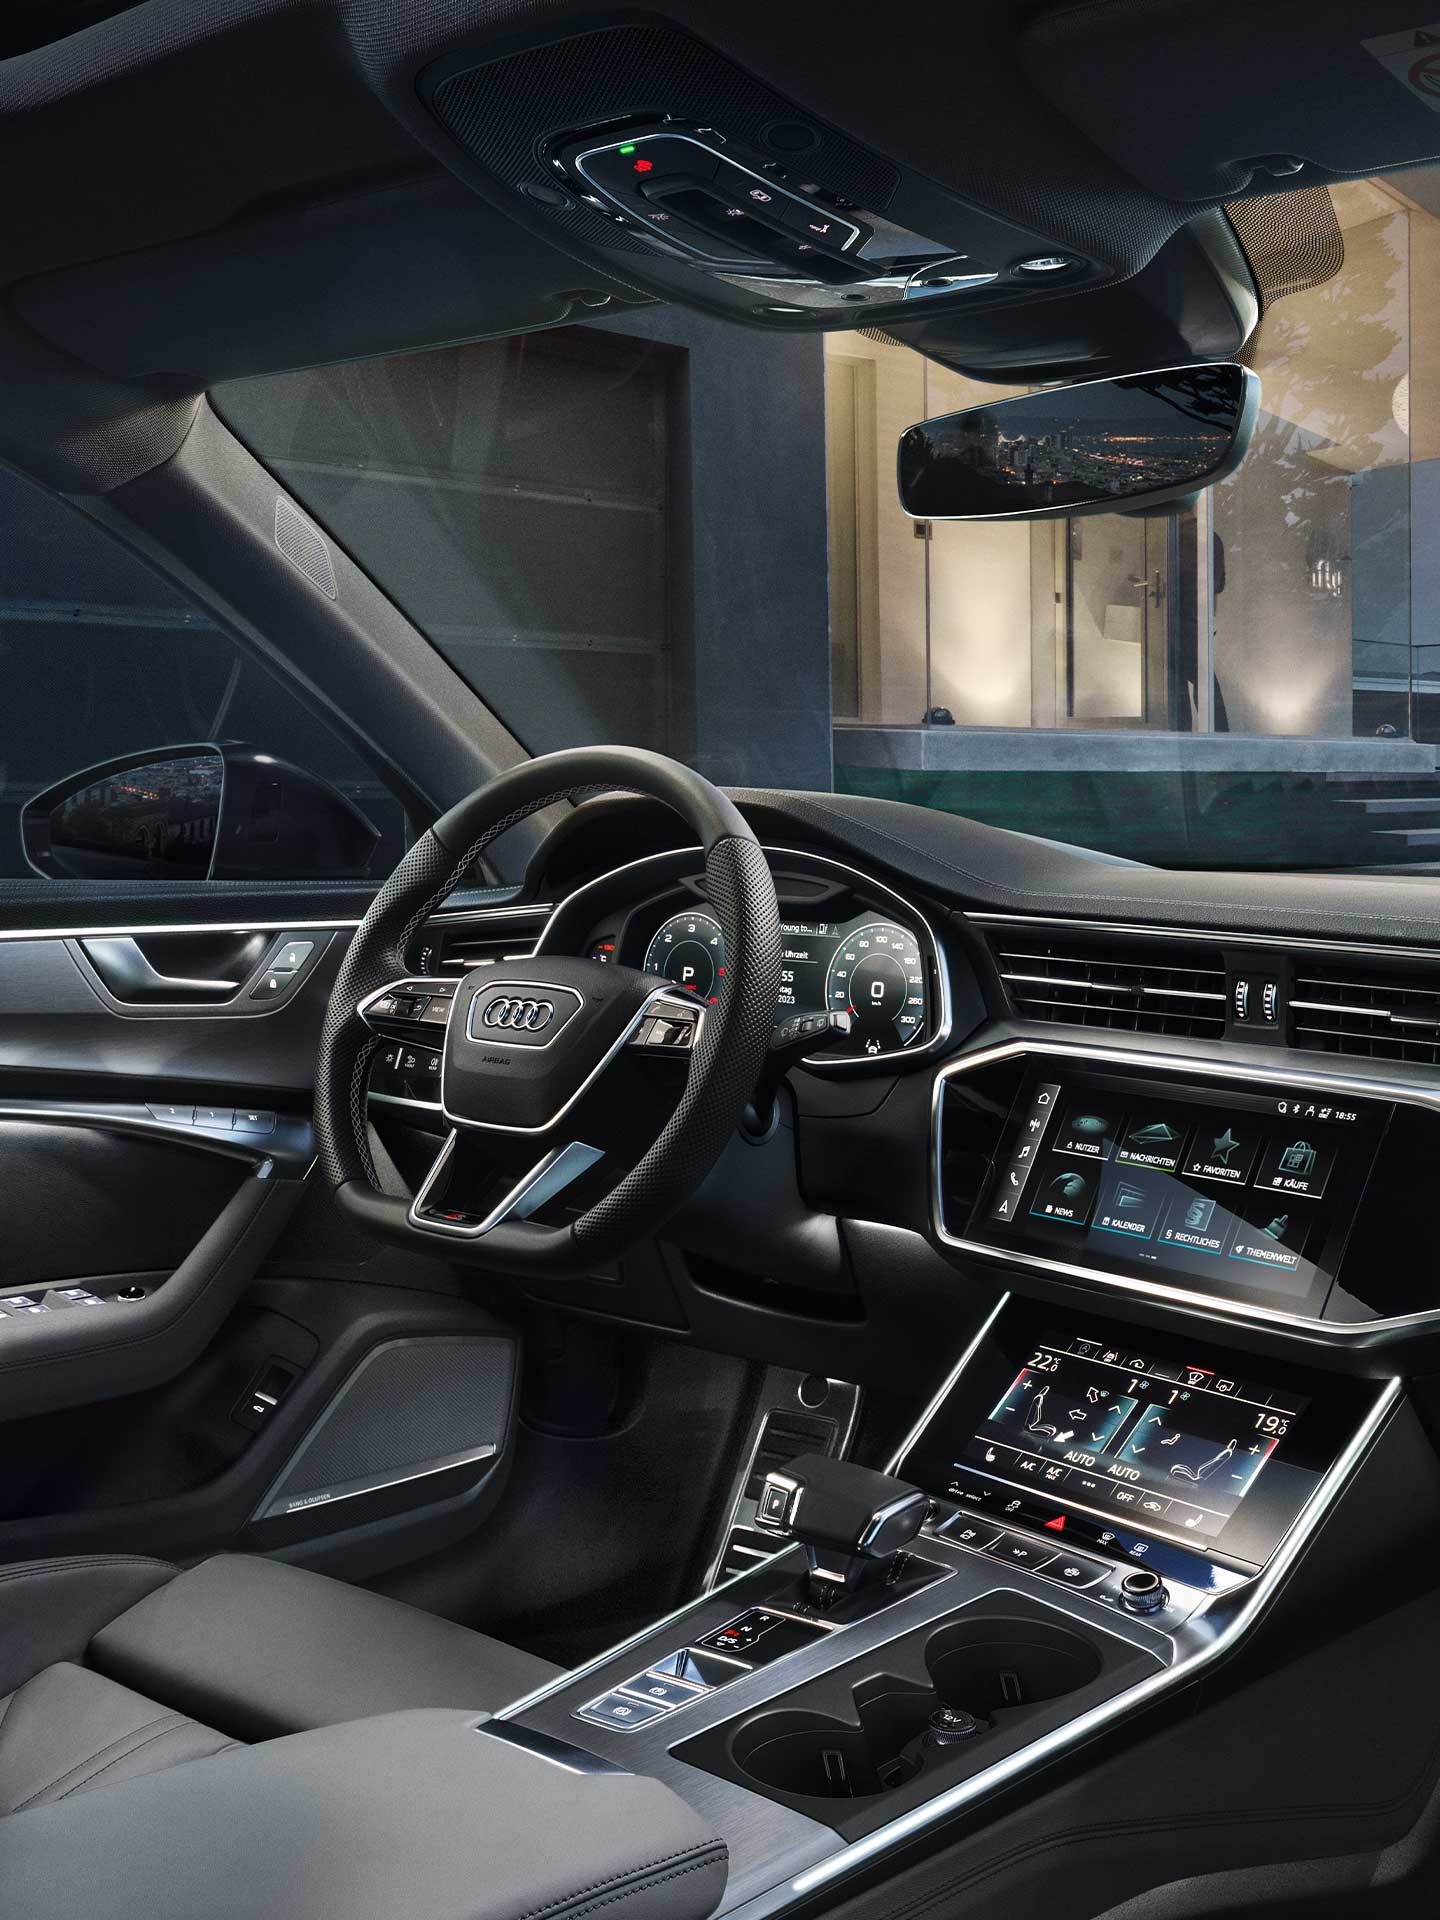 Thema's Audi cockpit